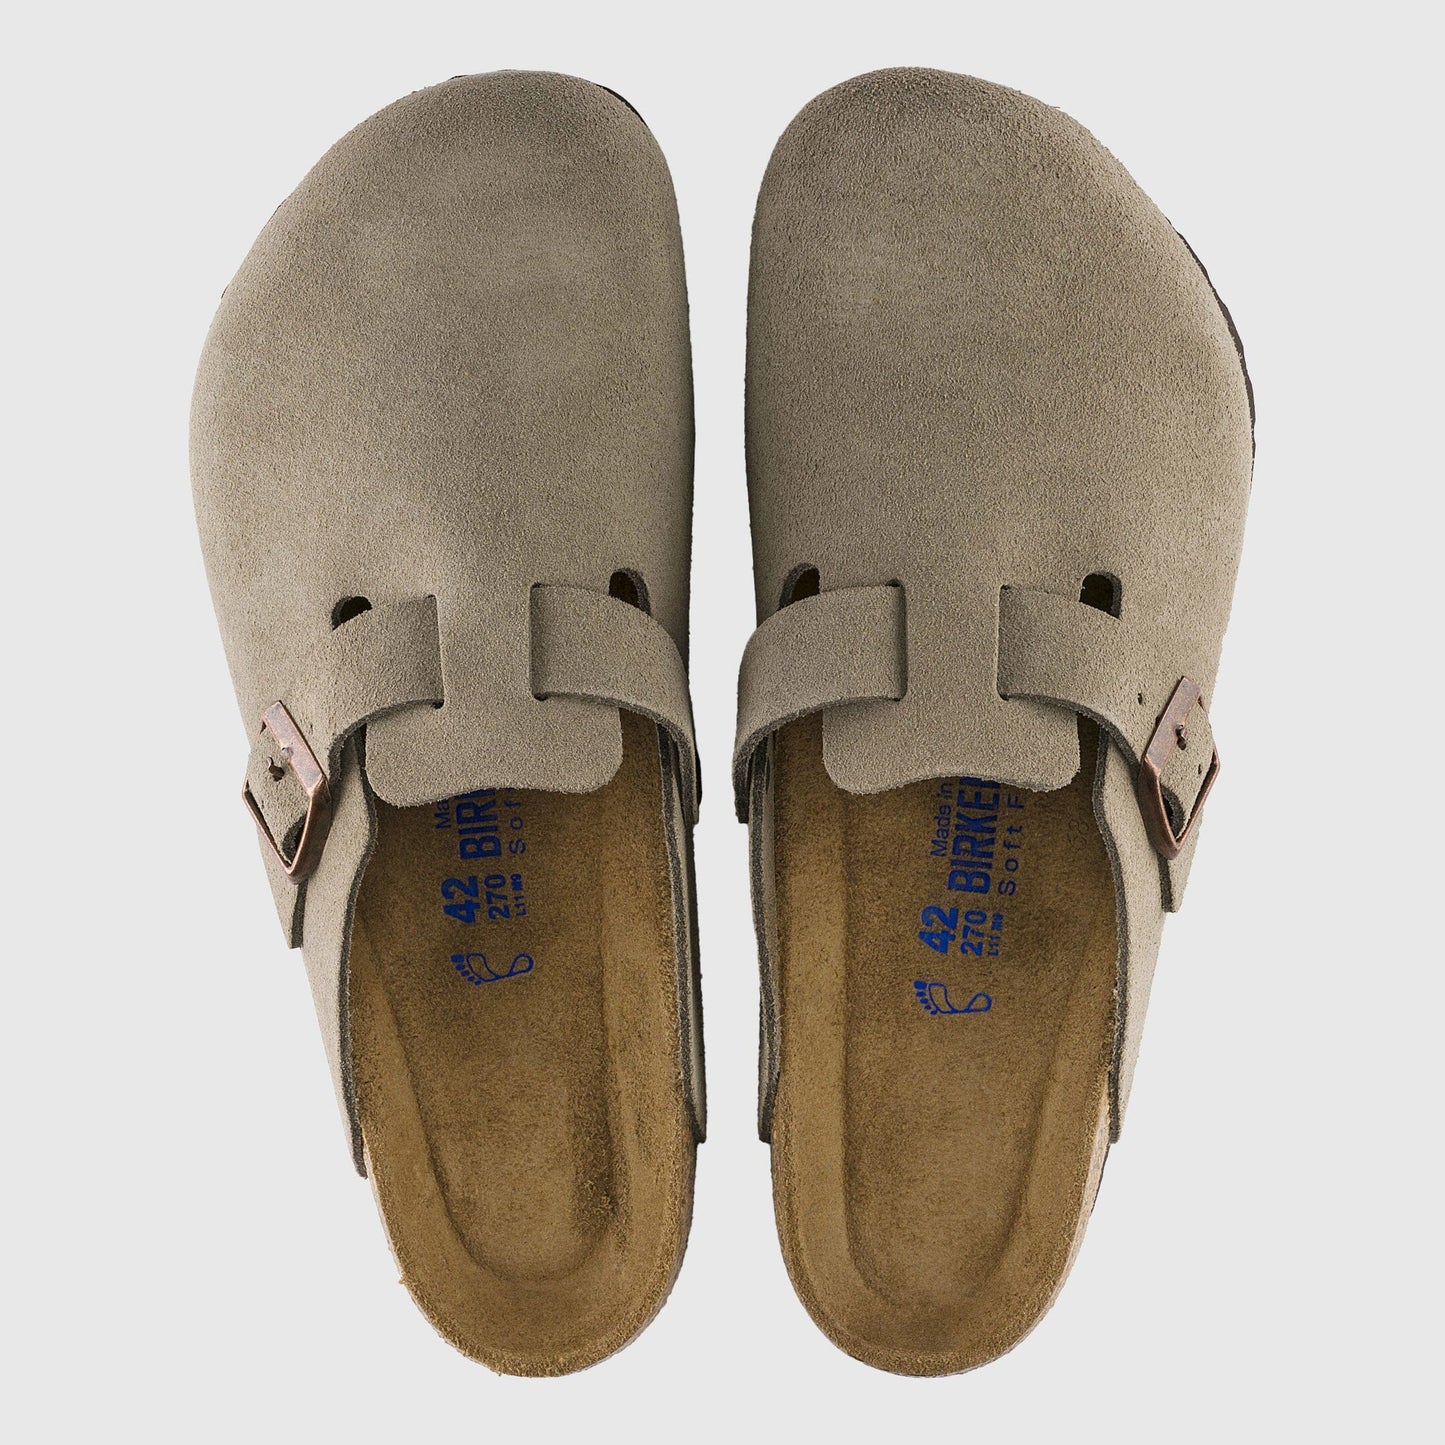 Birkenstock Boston Clog Suede - Taupe Shoes Birkenstock 